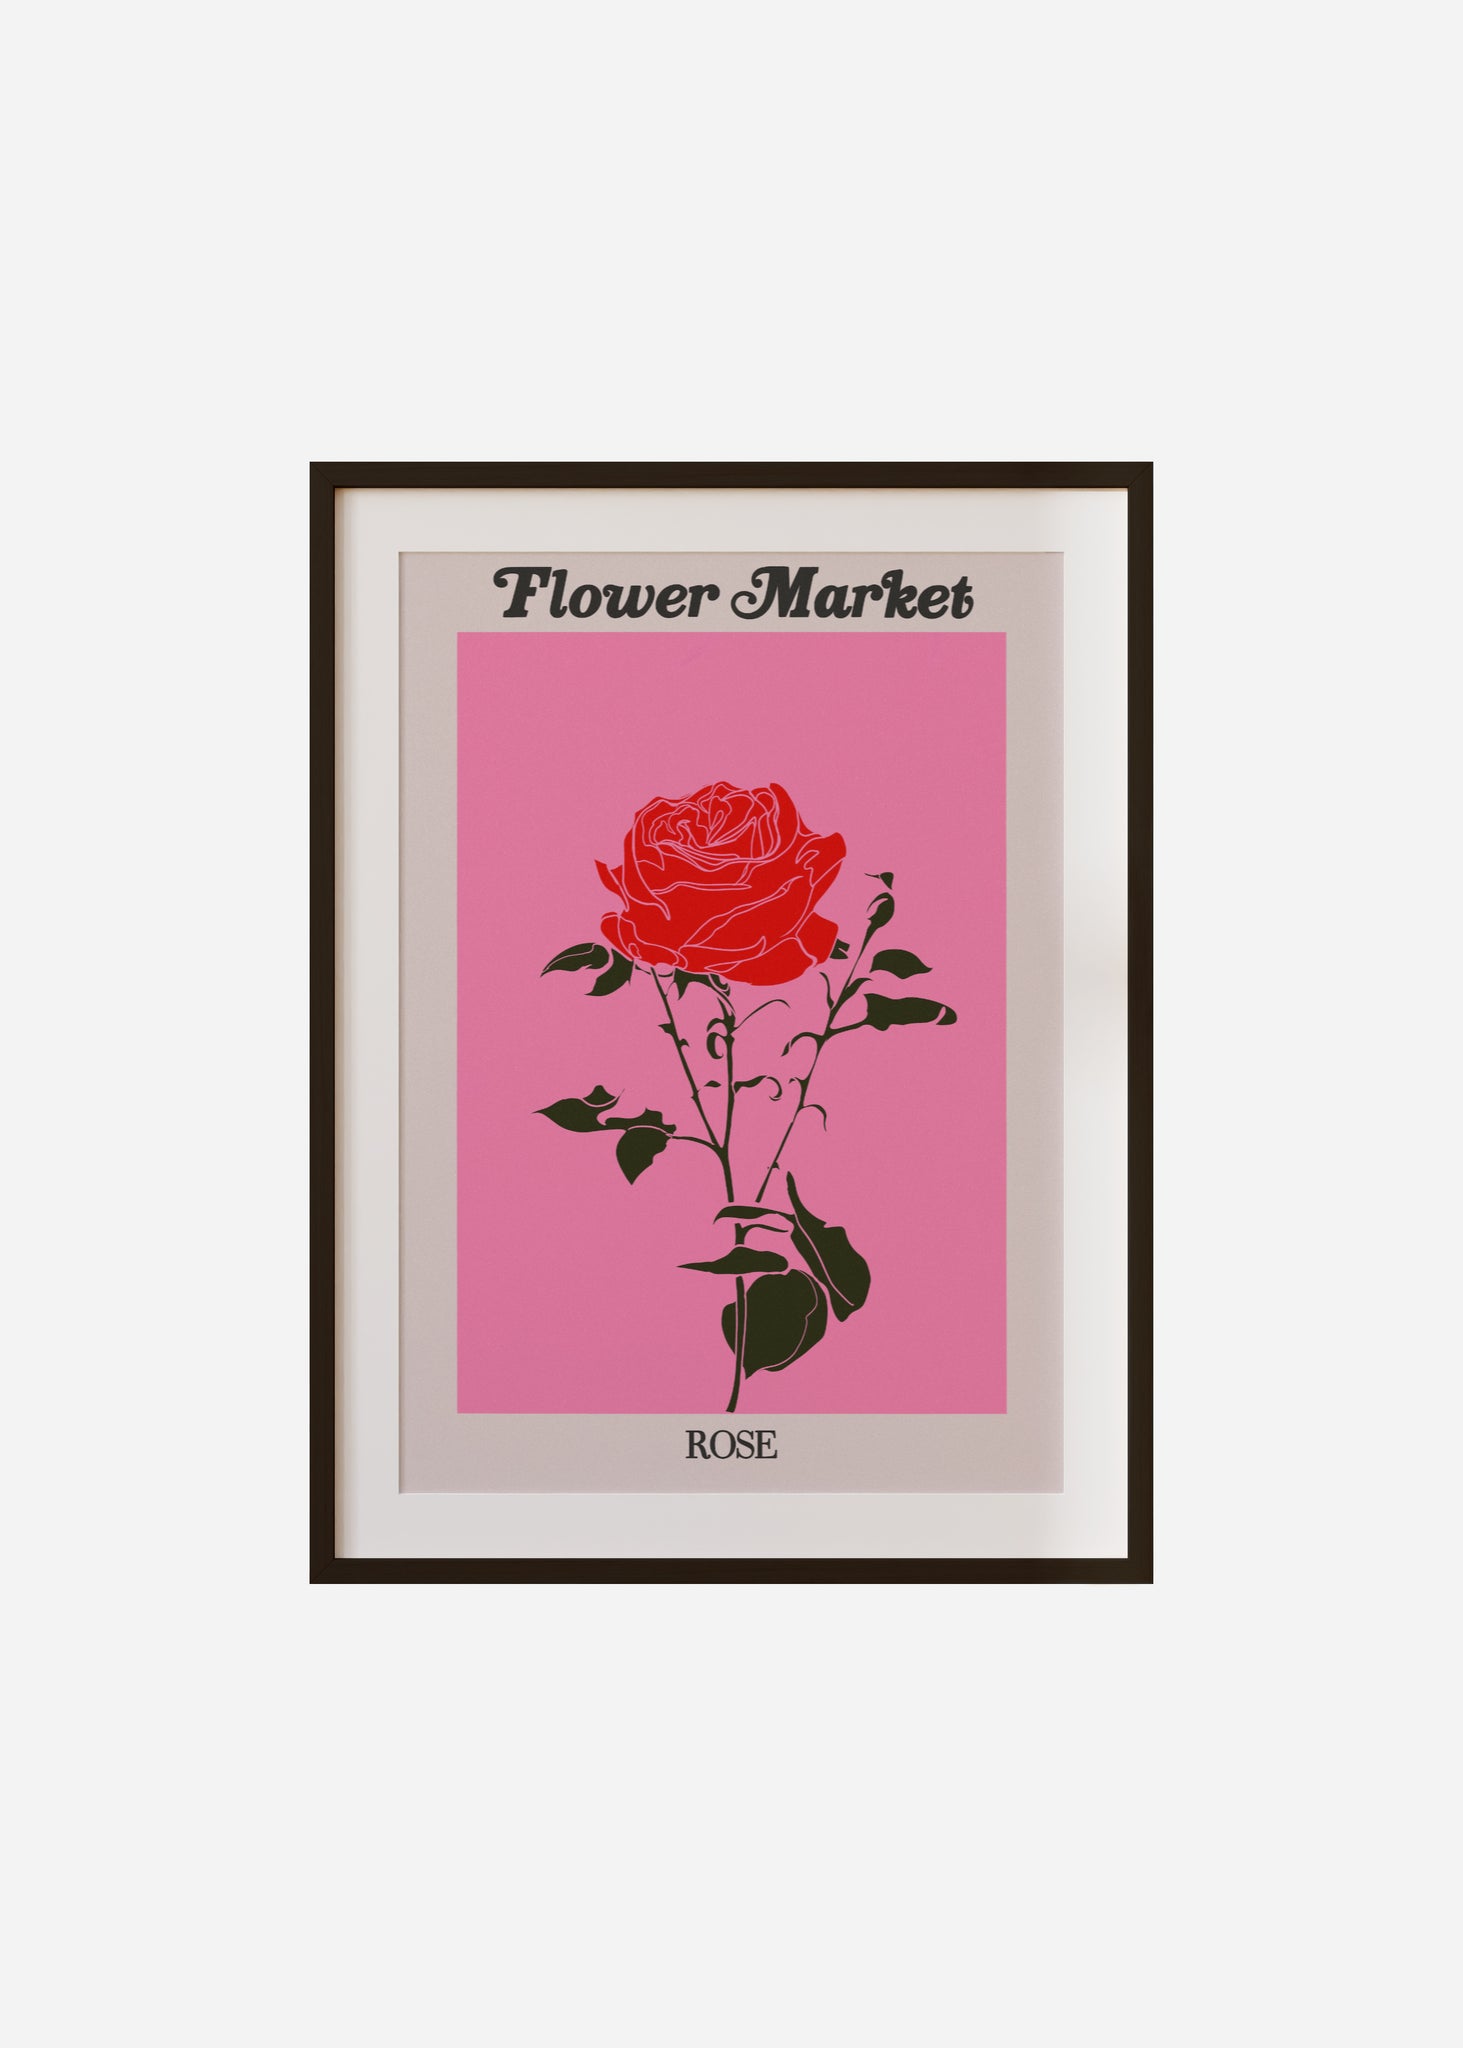 flower market / rose Framed & Mounted Print